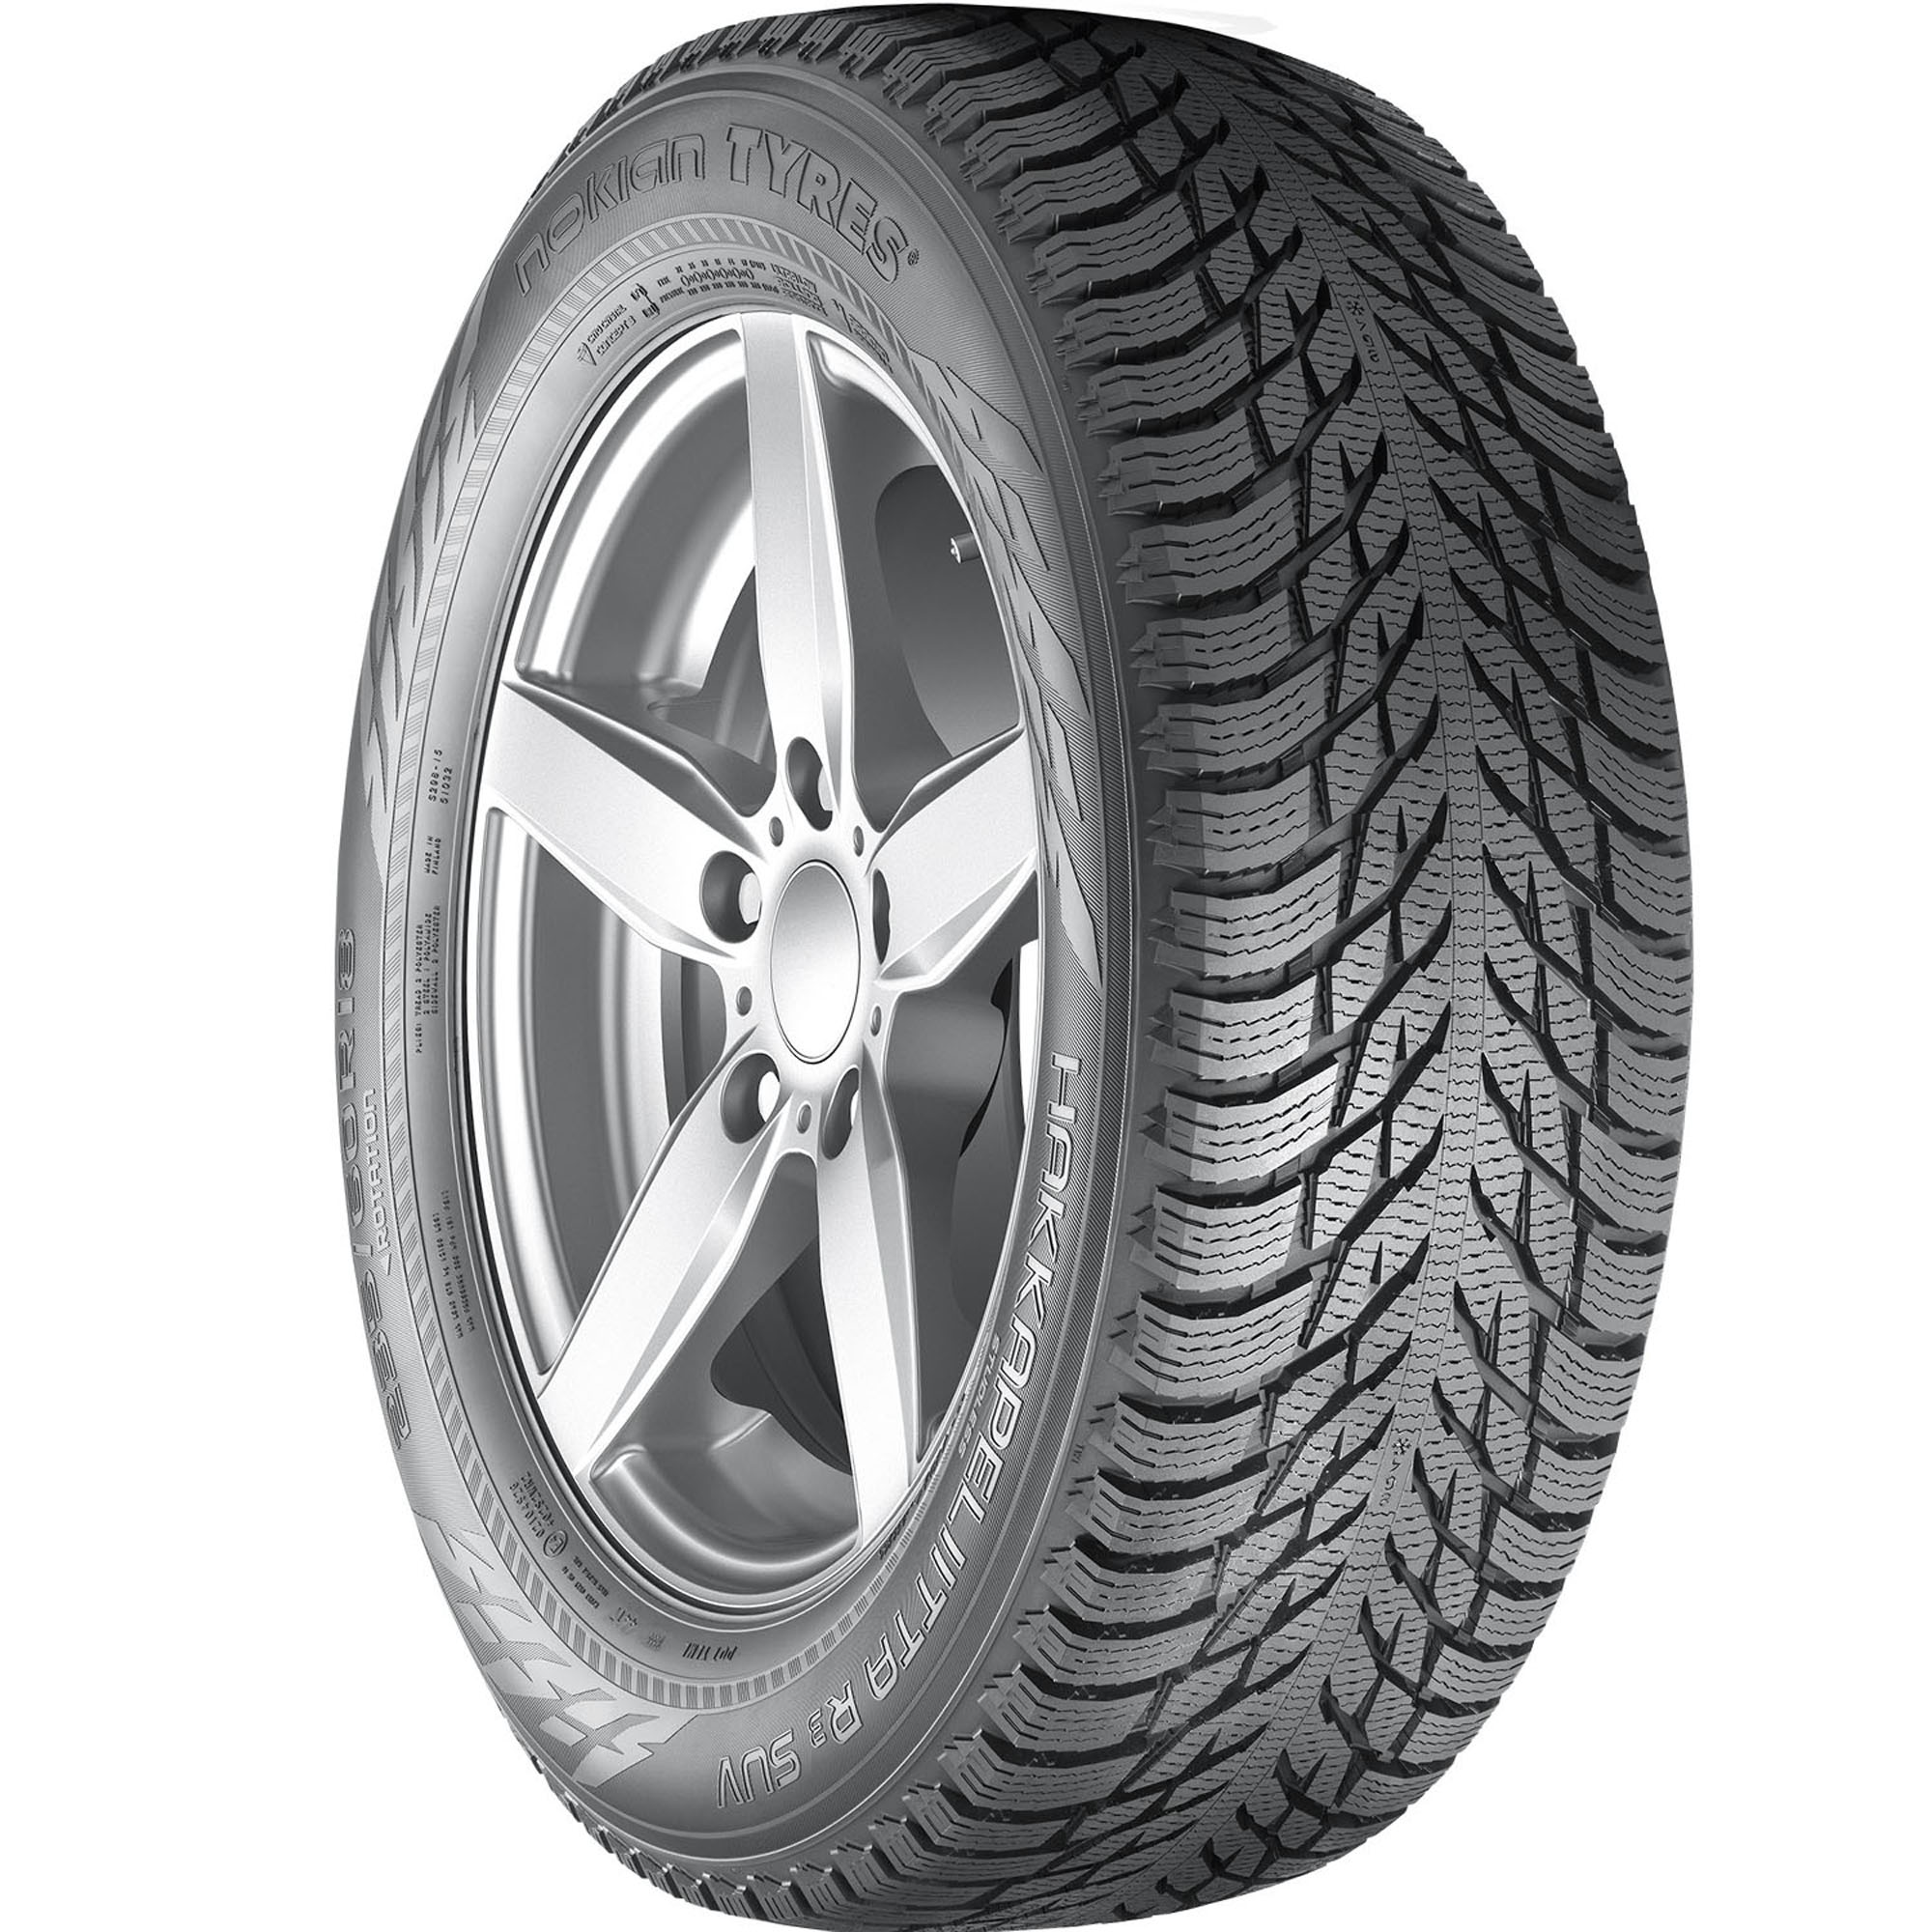 2356018 Hakkapeliitta Tires Suv | New - Nokian 235/60r18 R3 eBay 60 235 18 1